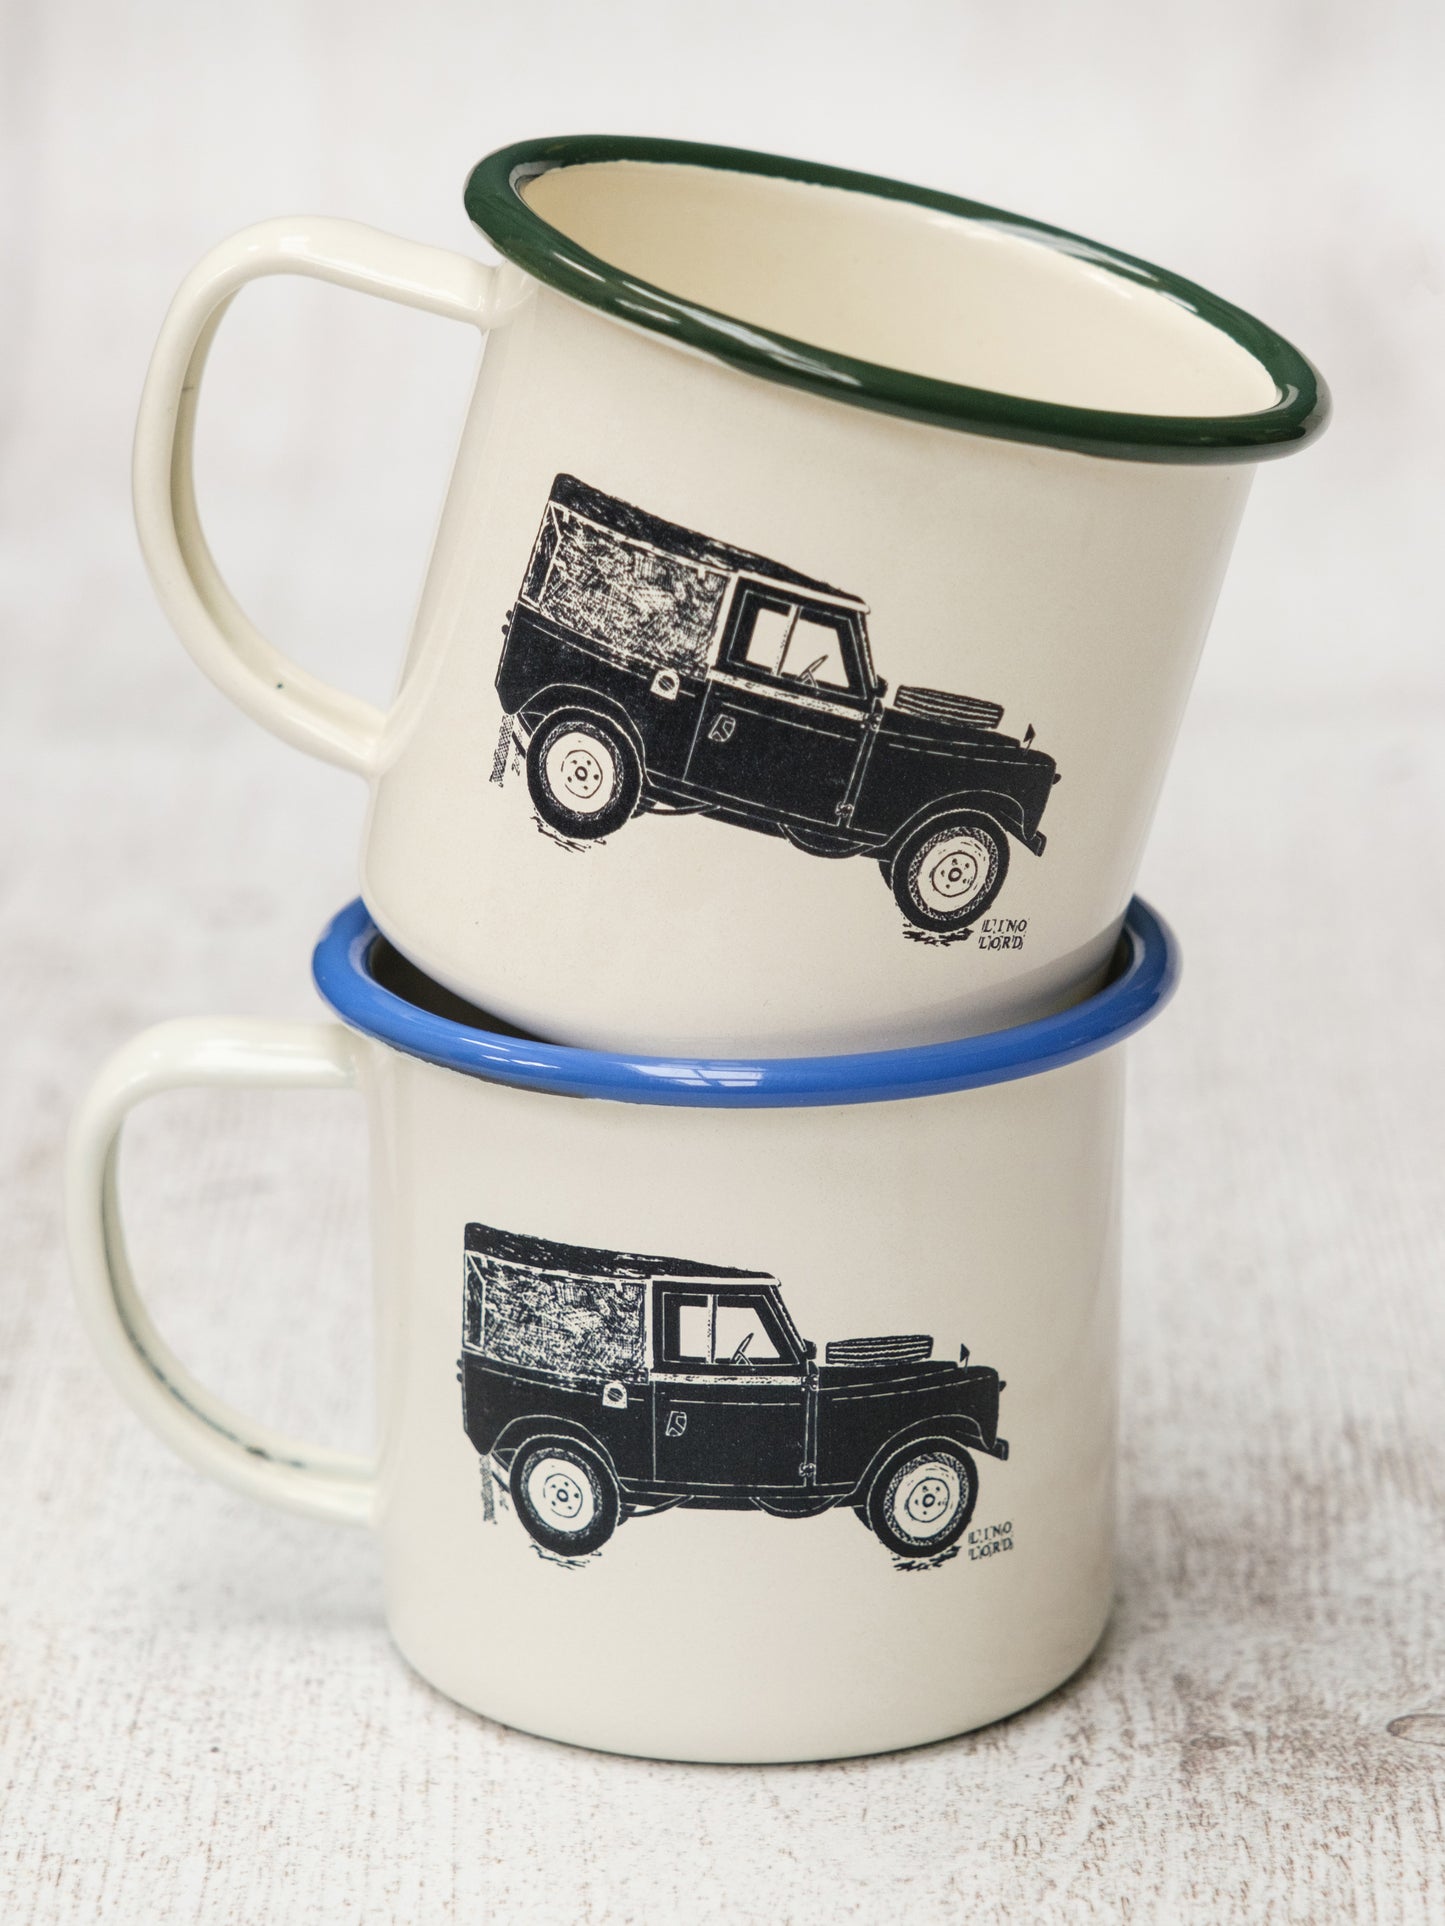 Cream Enamel Mug with Land Rover Design